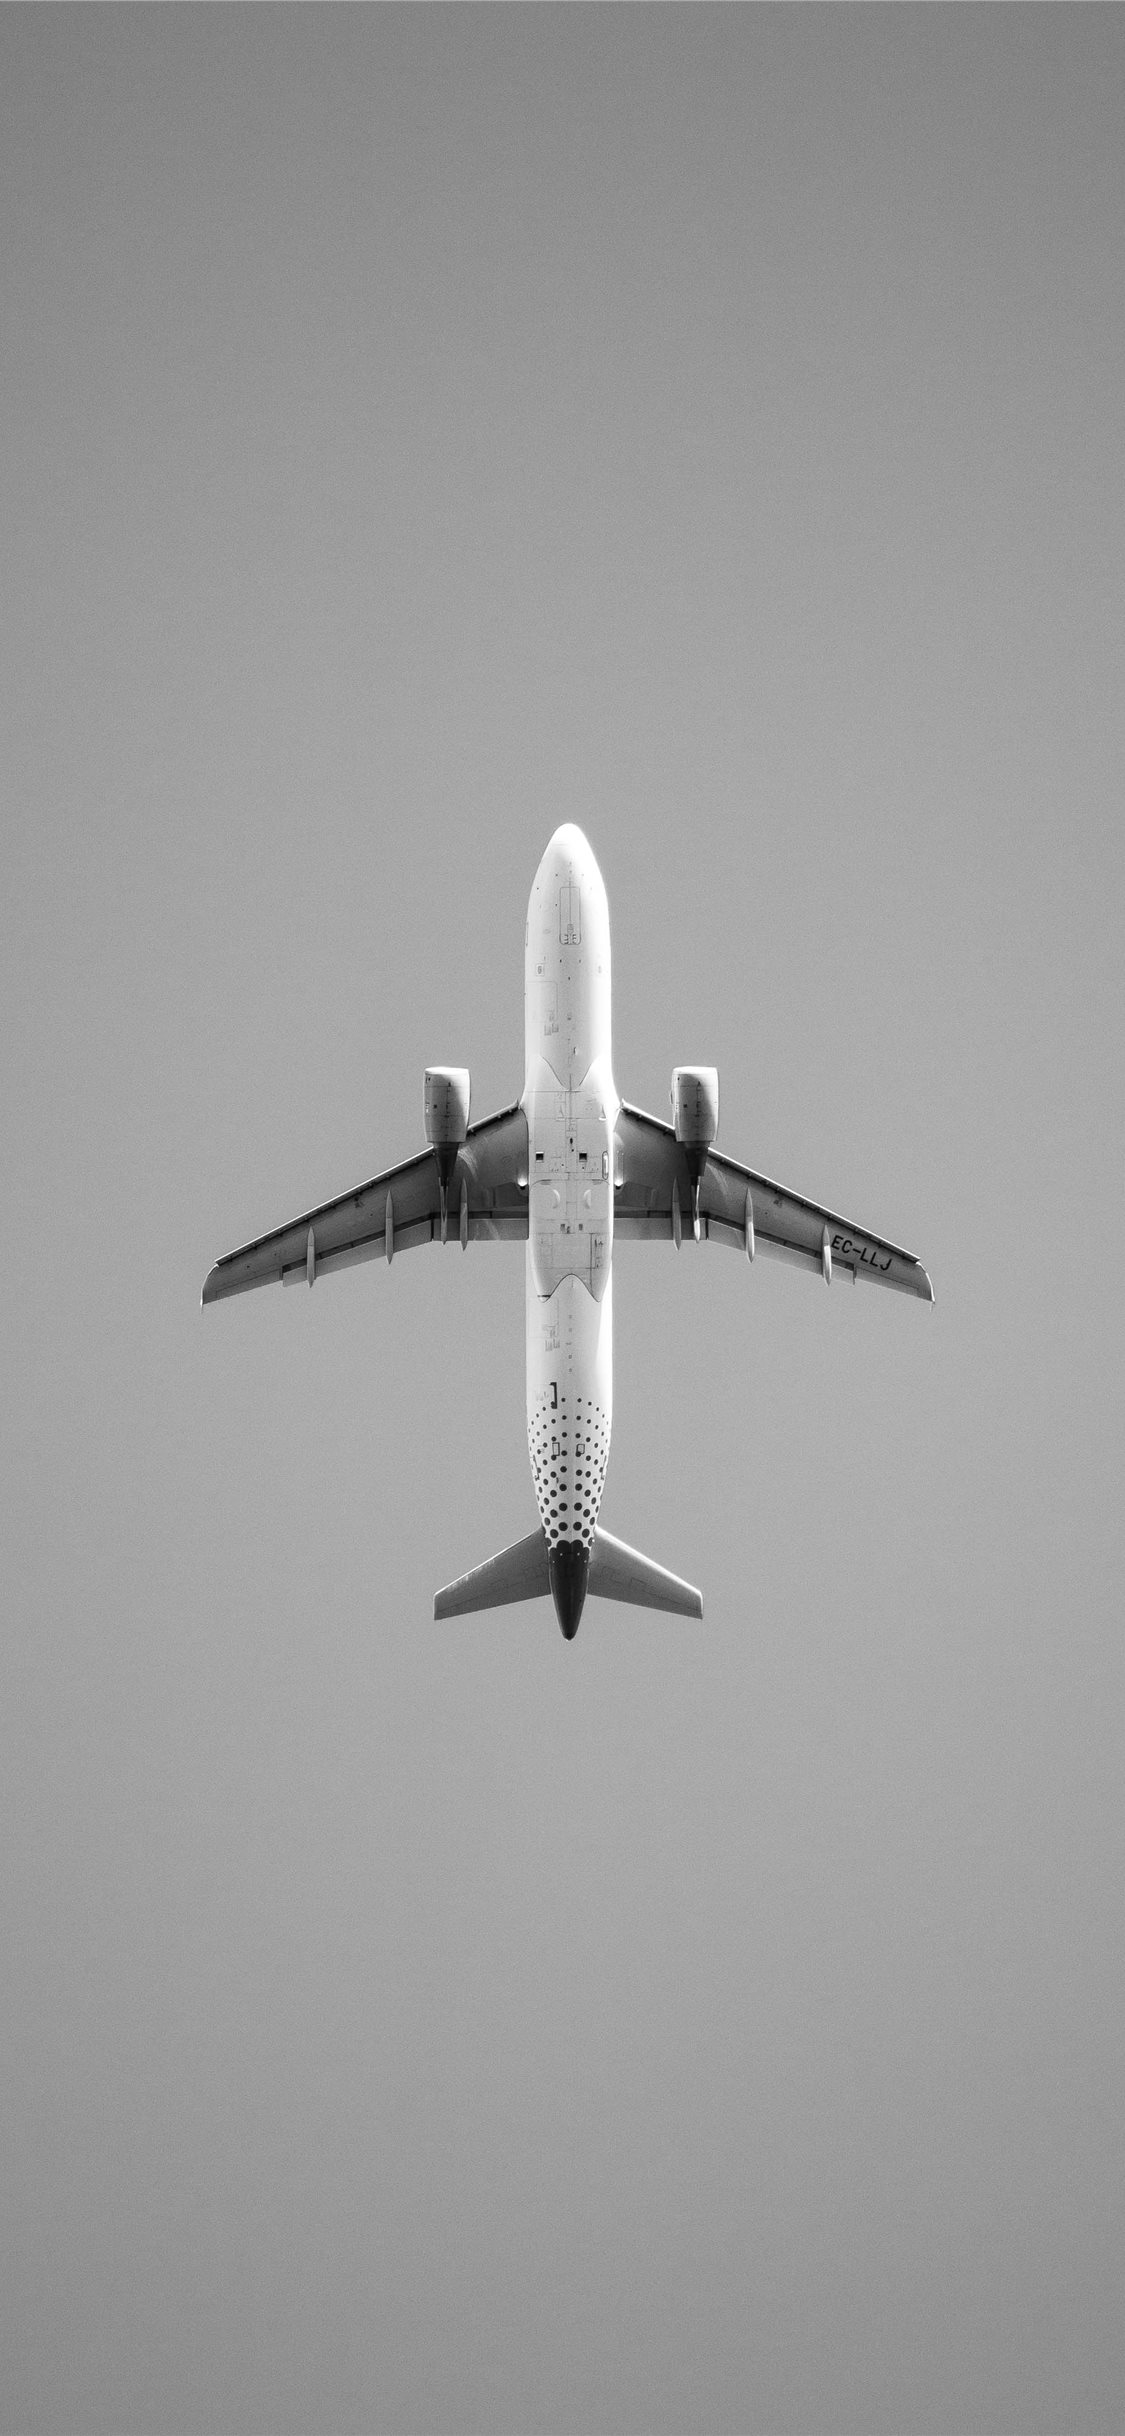 Iphone Xr Wallpaper Airplane - HD Wallpaper 